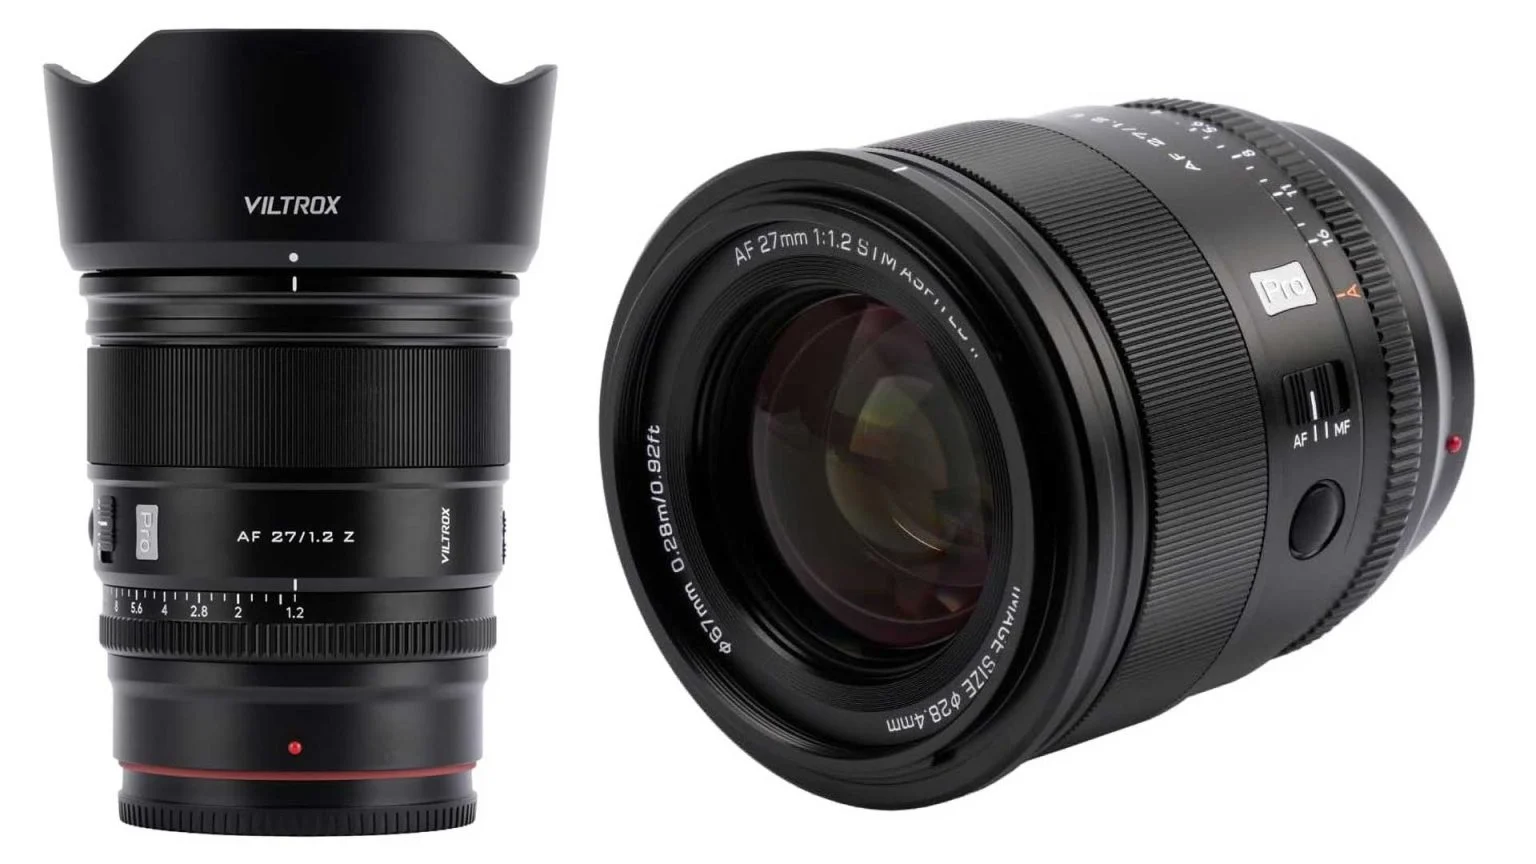 Lensa Viltrox AF 27mm f/1.2 Pro Akhirnya Menyambangi Kamera Sony dan Nikon APS-C.